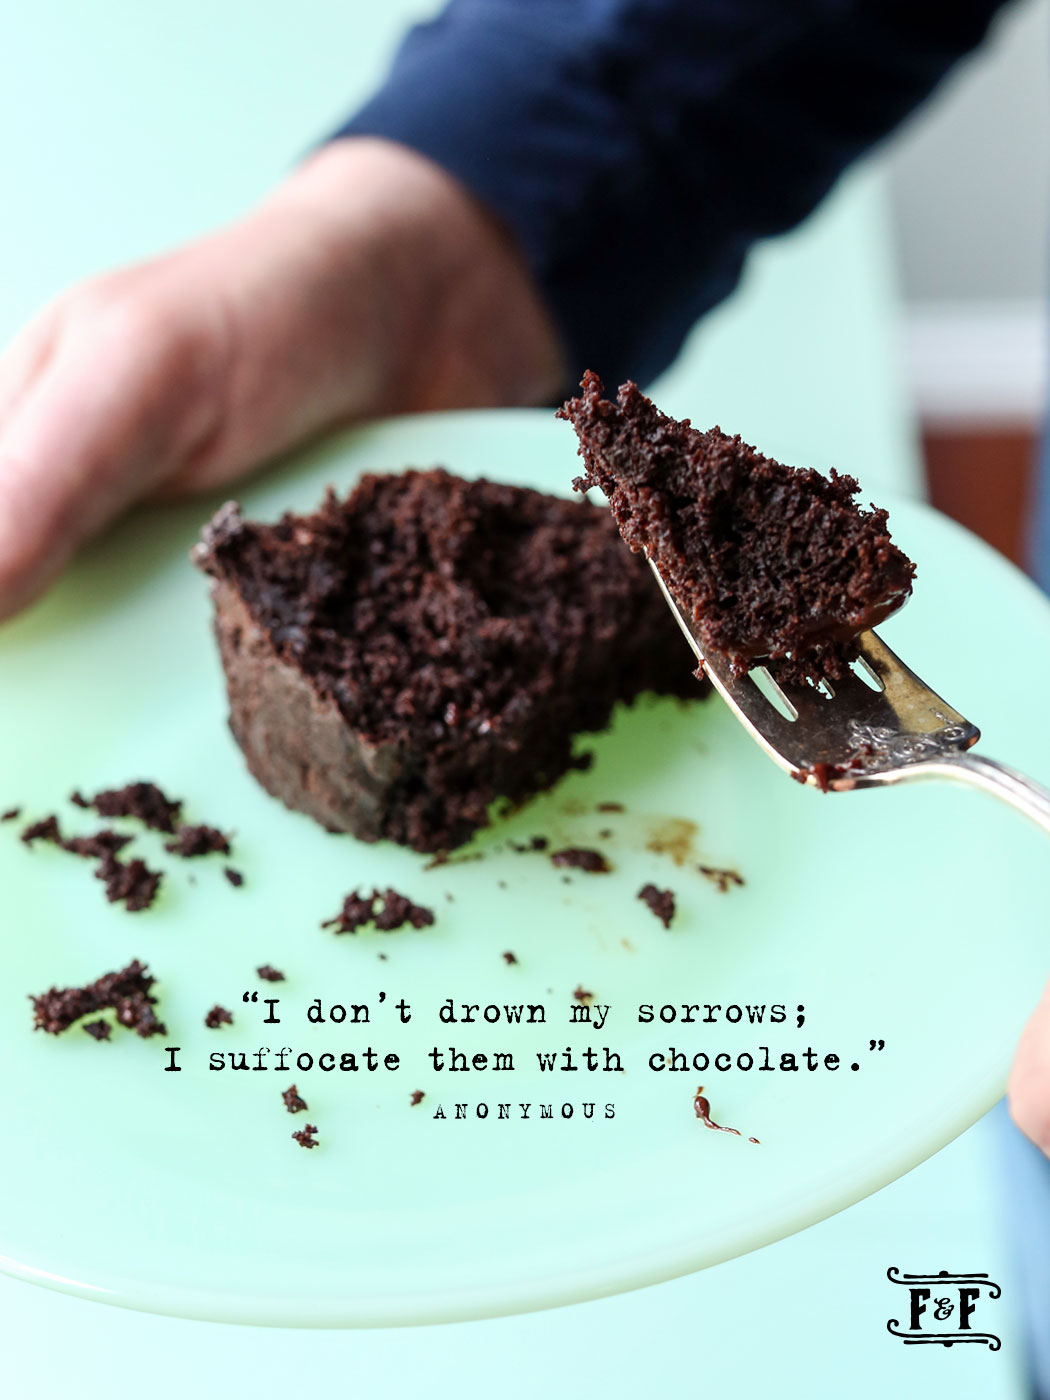 Easy to Love Chocolate Bundt Cake